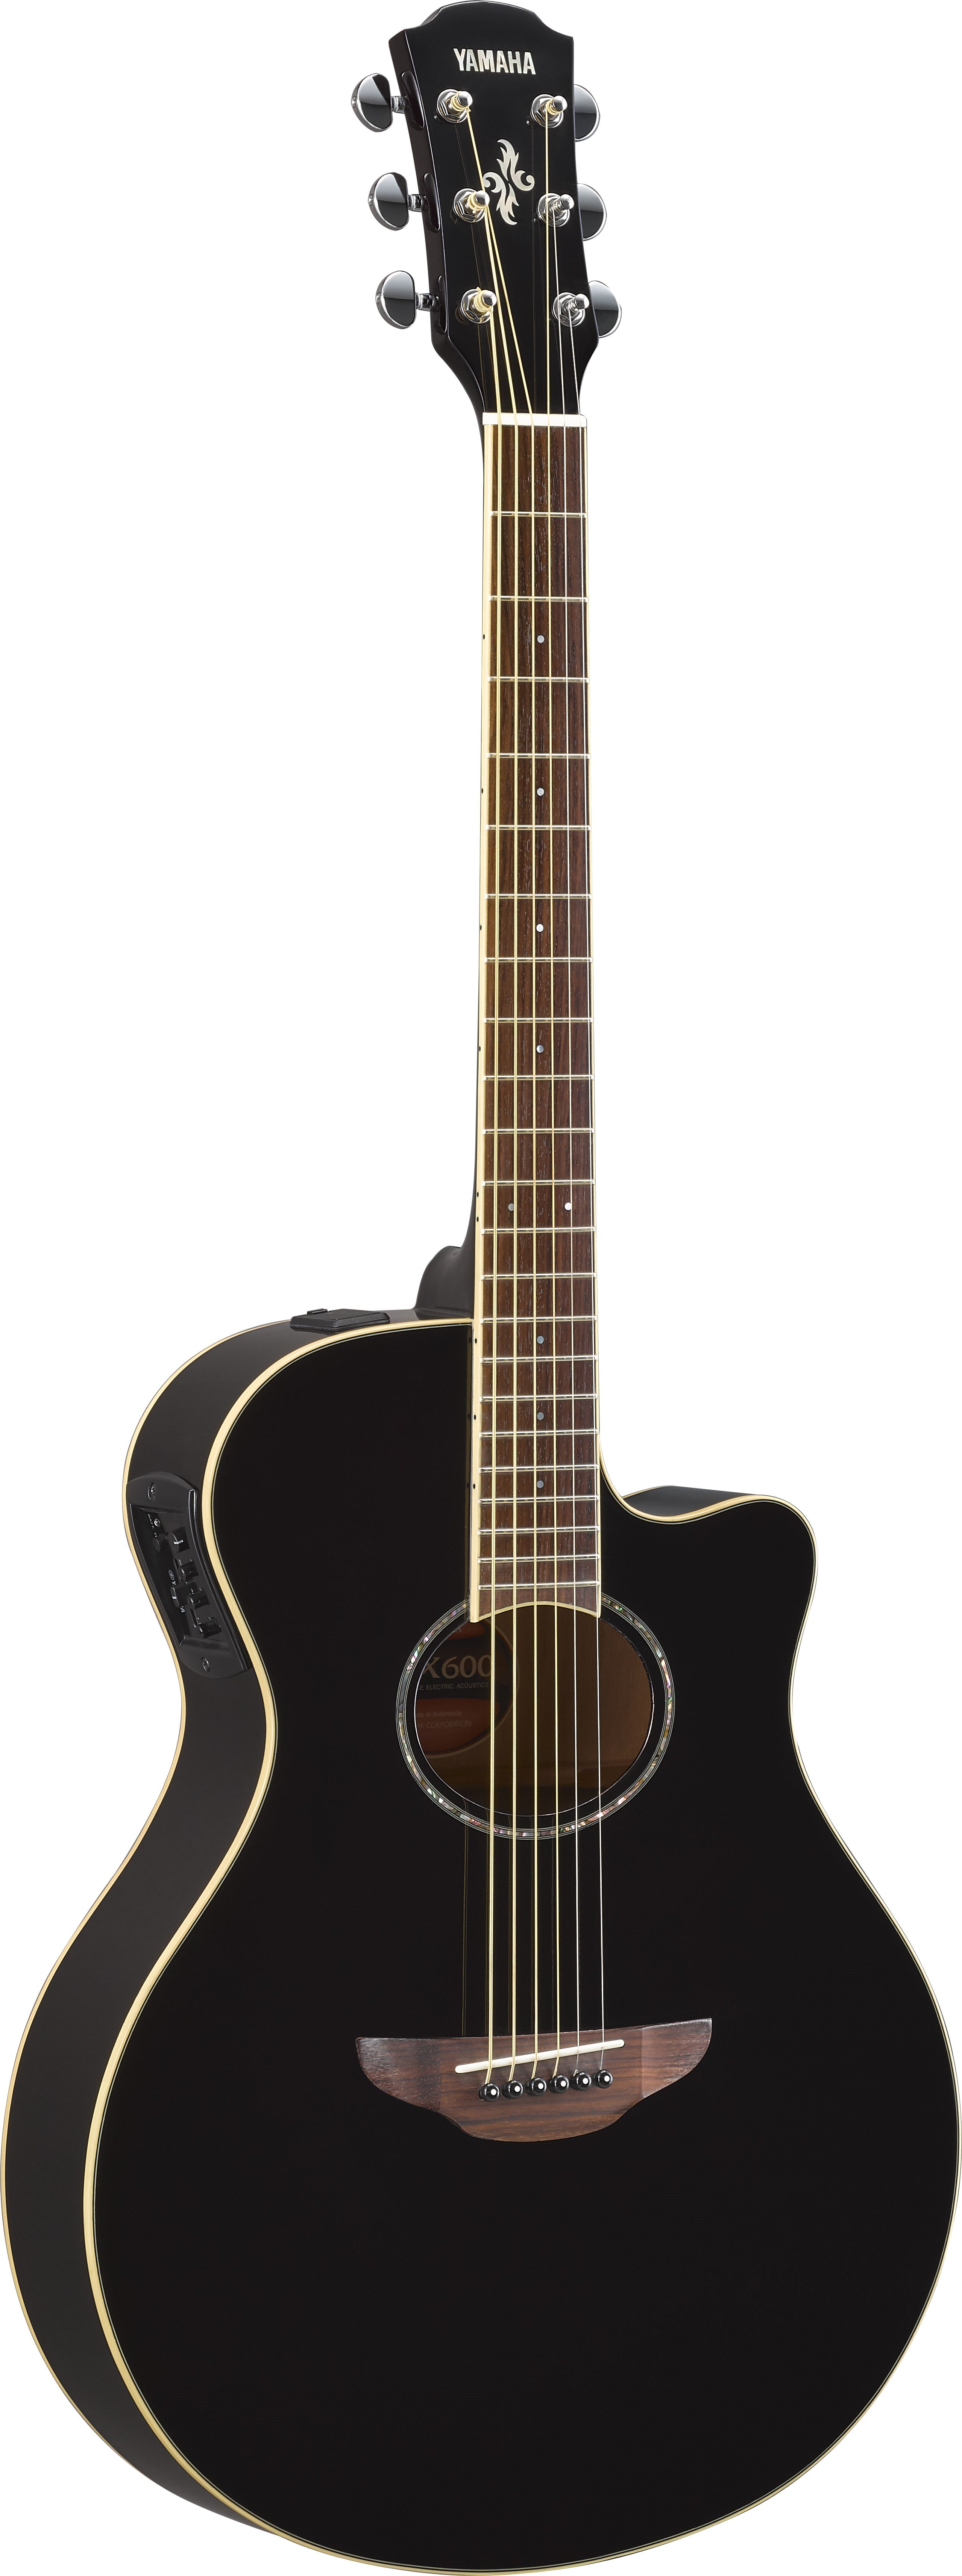 Yamaha Apx600 - Black - Guitarra electro acustica - Variation 2